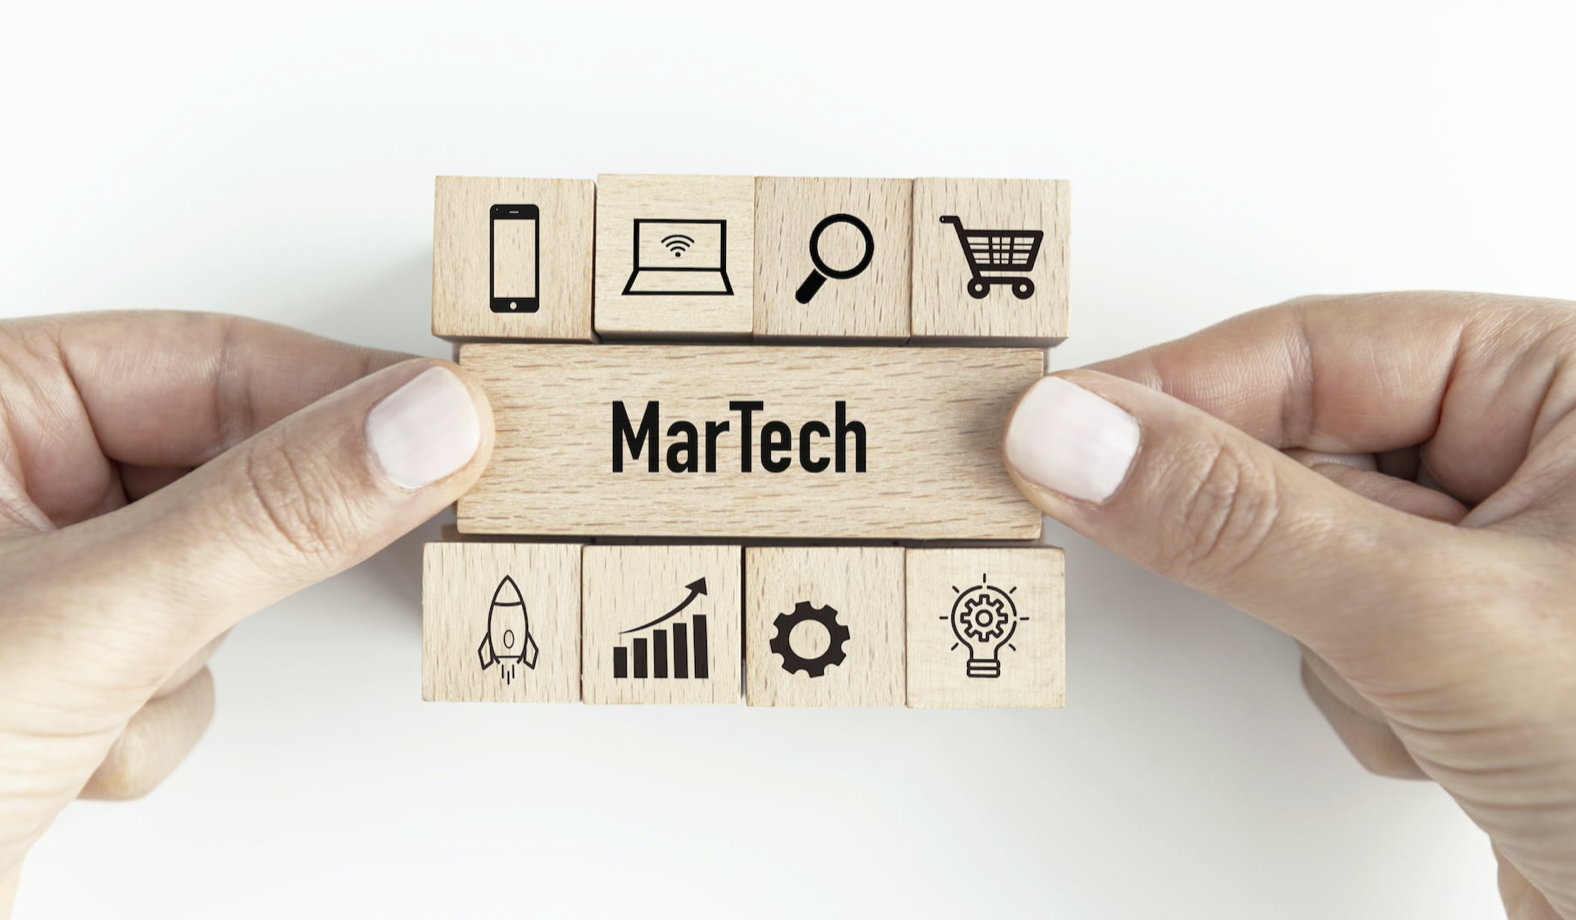 Explore HubSpot's MarTech solutions